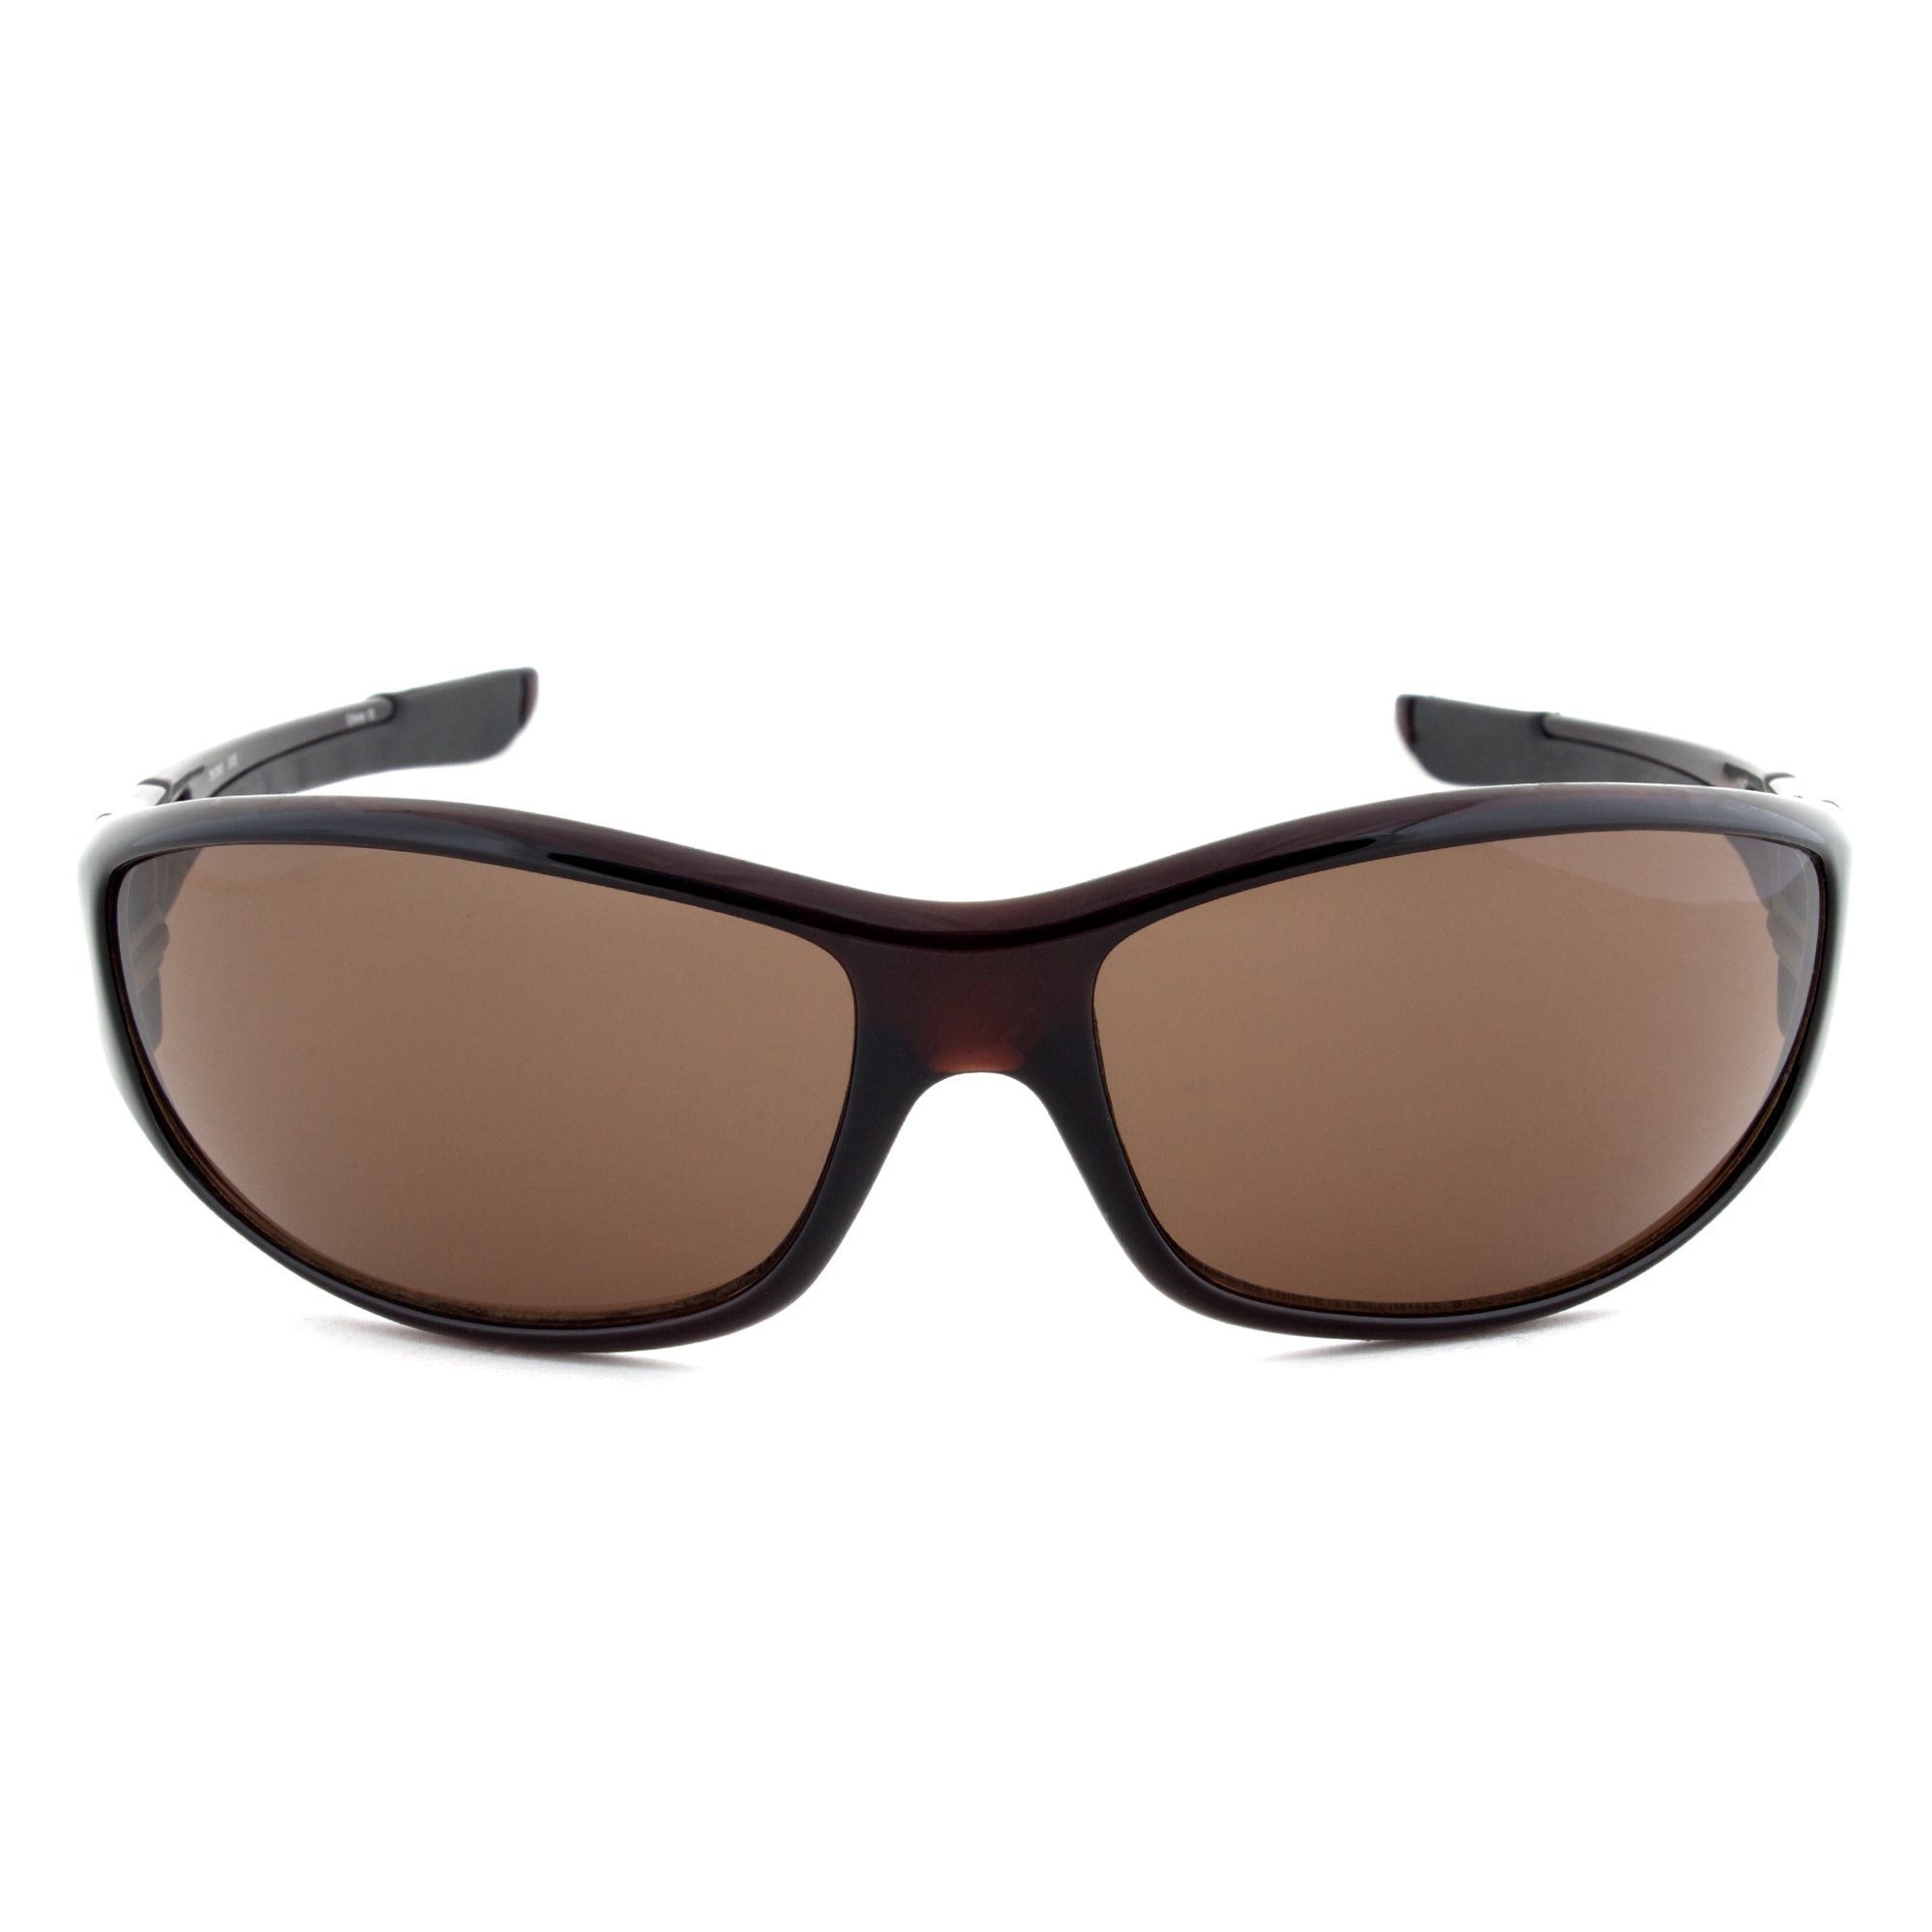 Timberland TB7093 50E Sport Wrap Sunglasses | Dark Brown Frame | Brown Lens